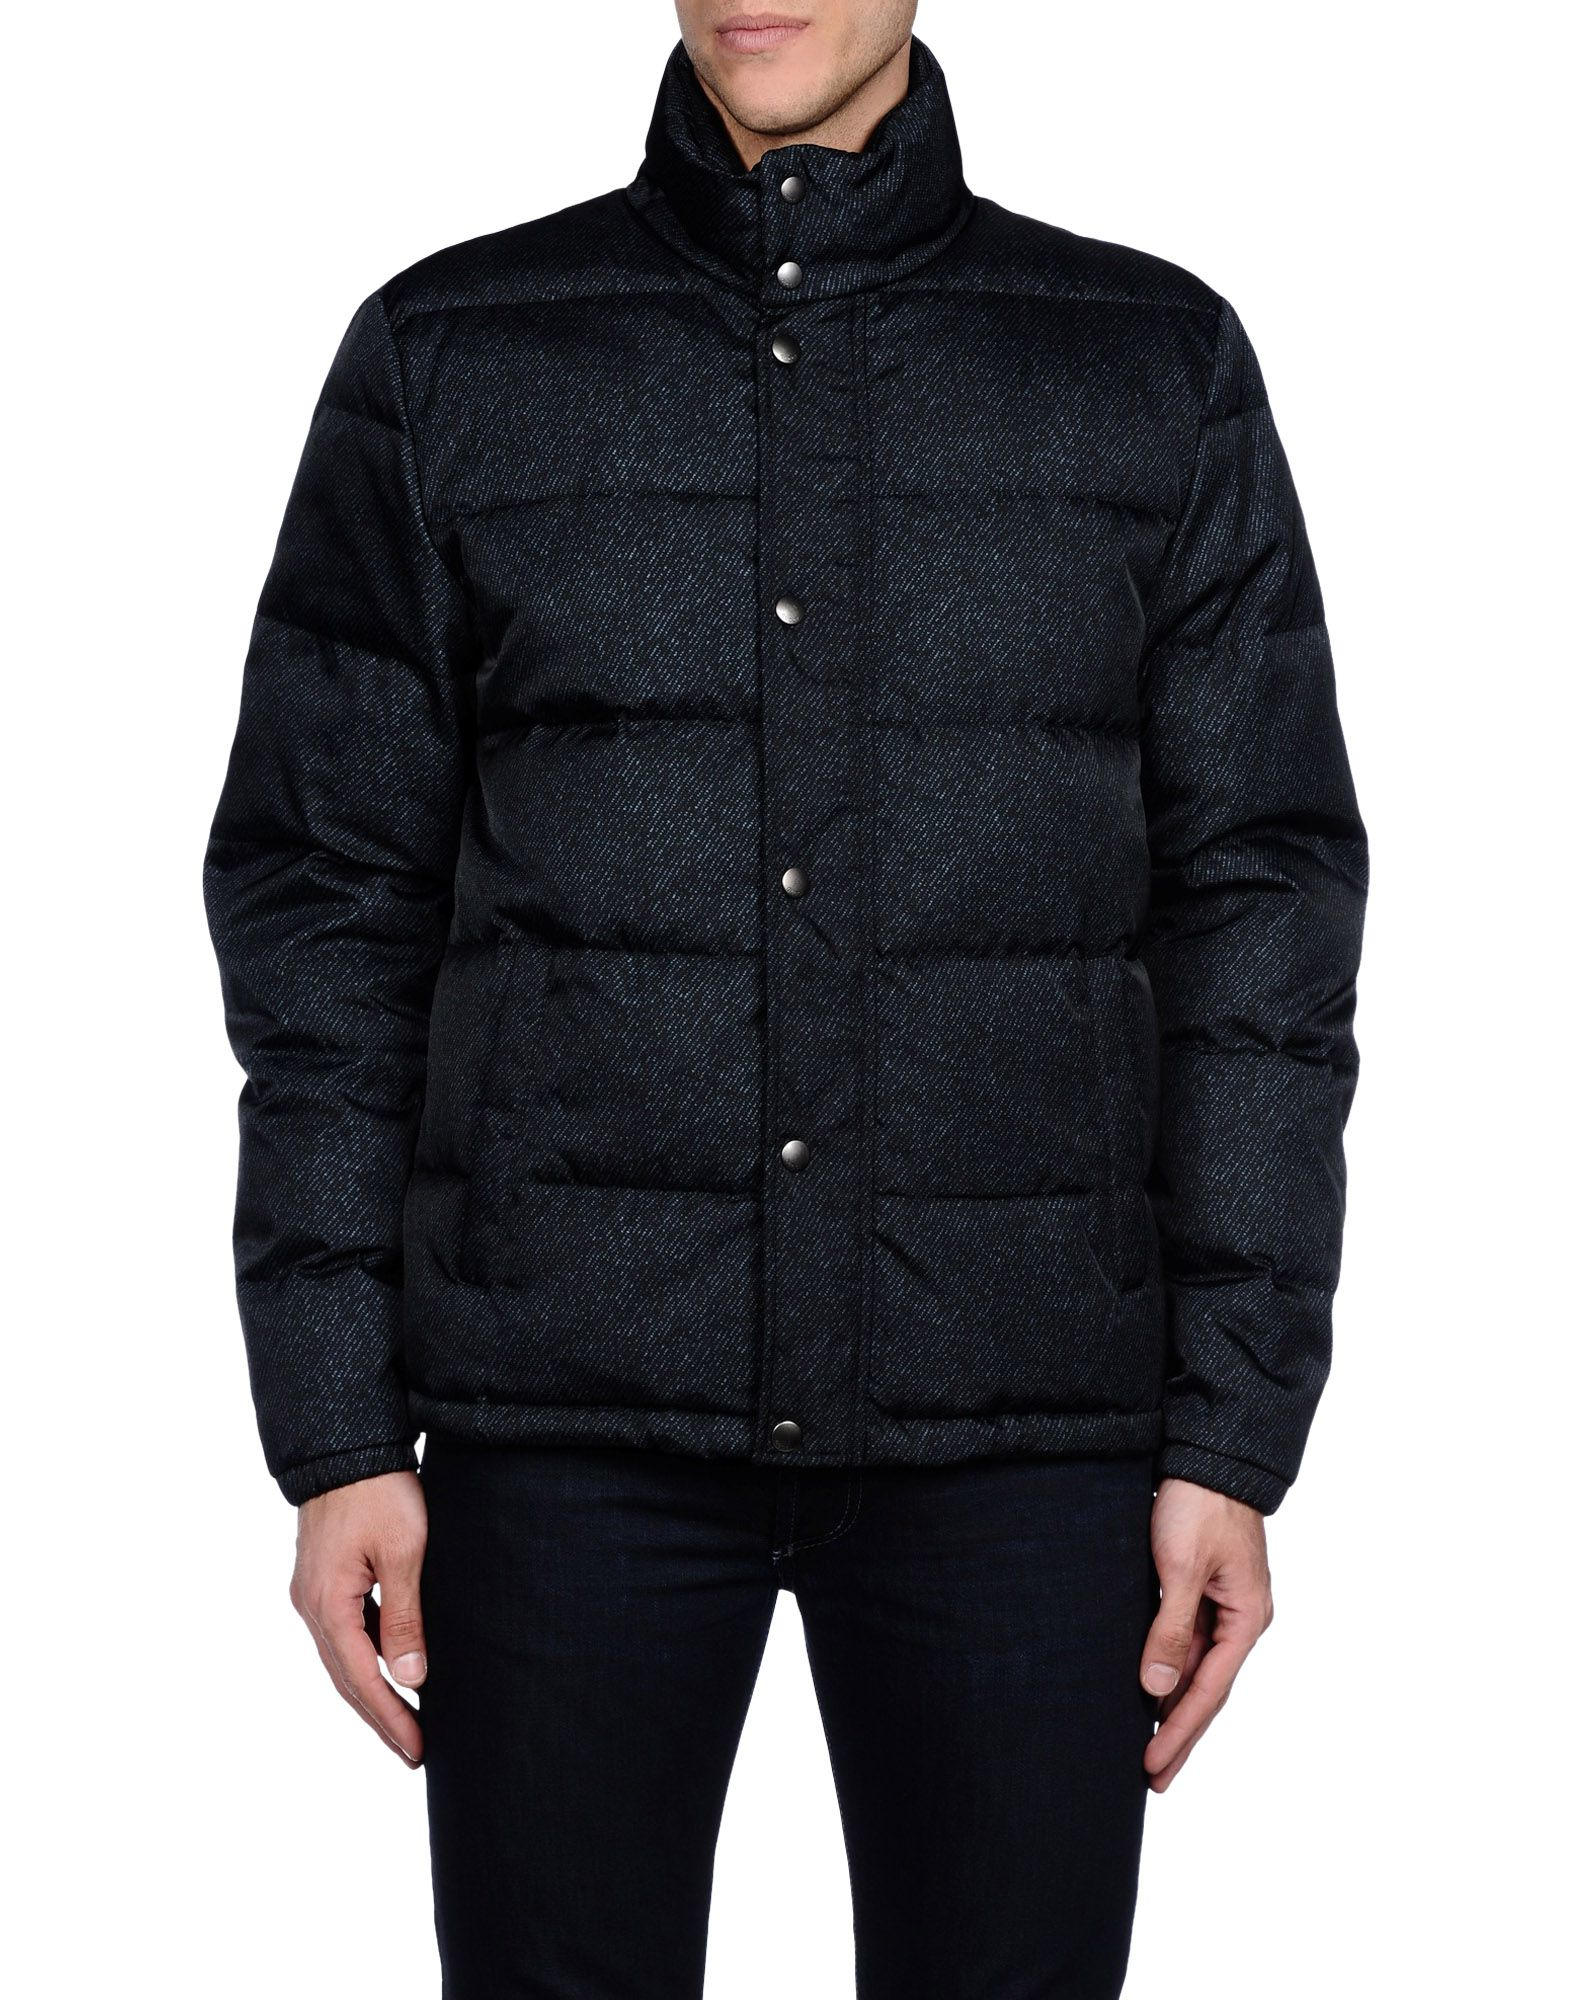 Gucci Jacket in Black for Men - Lyst